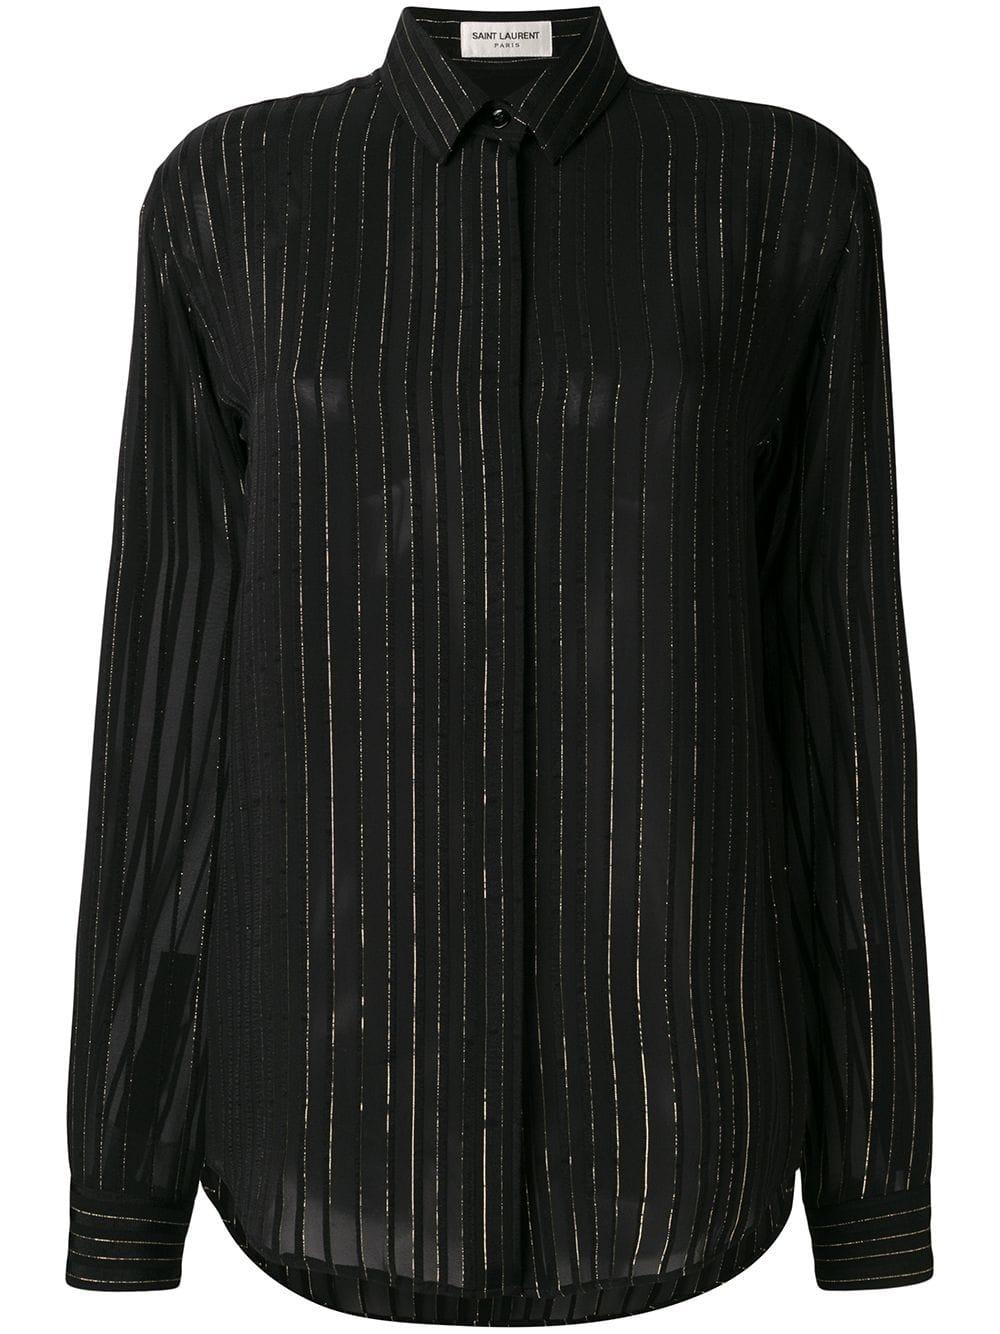 Saint Laurent Lurex Stripe Sheer Shirt in Black - Lyst